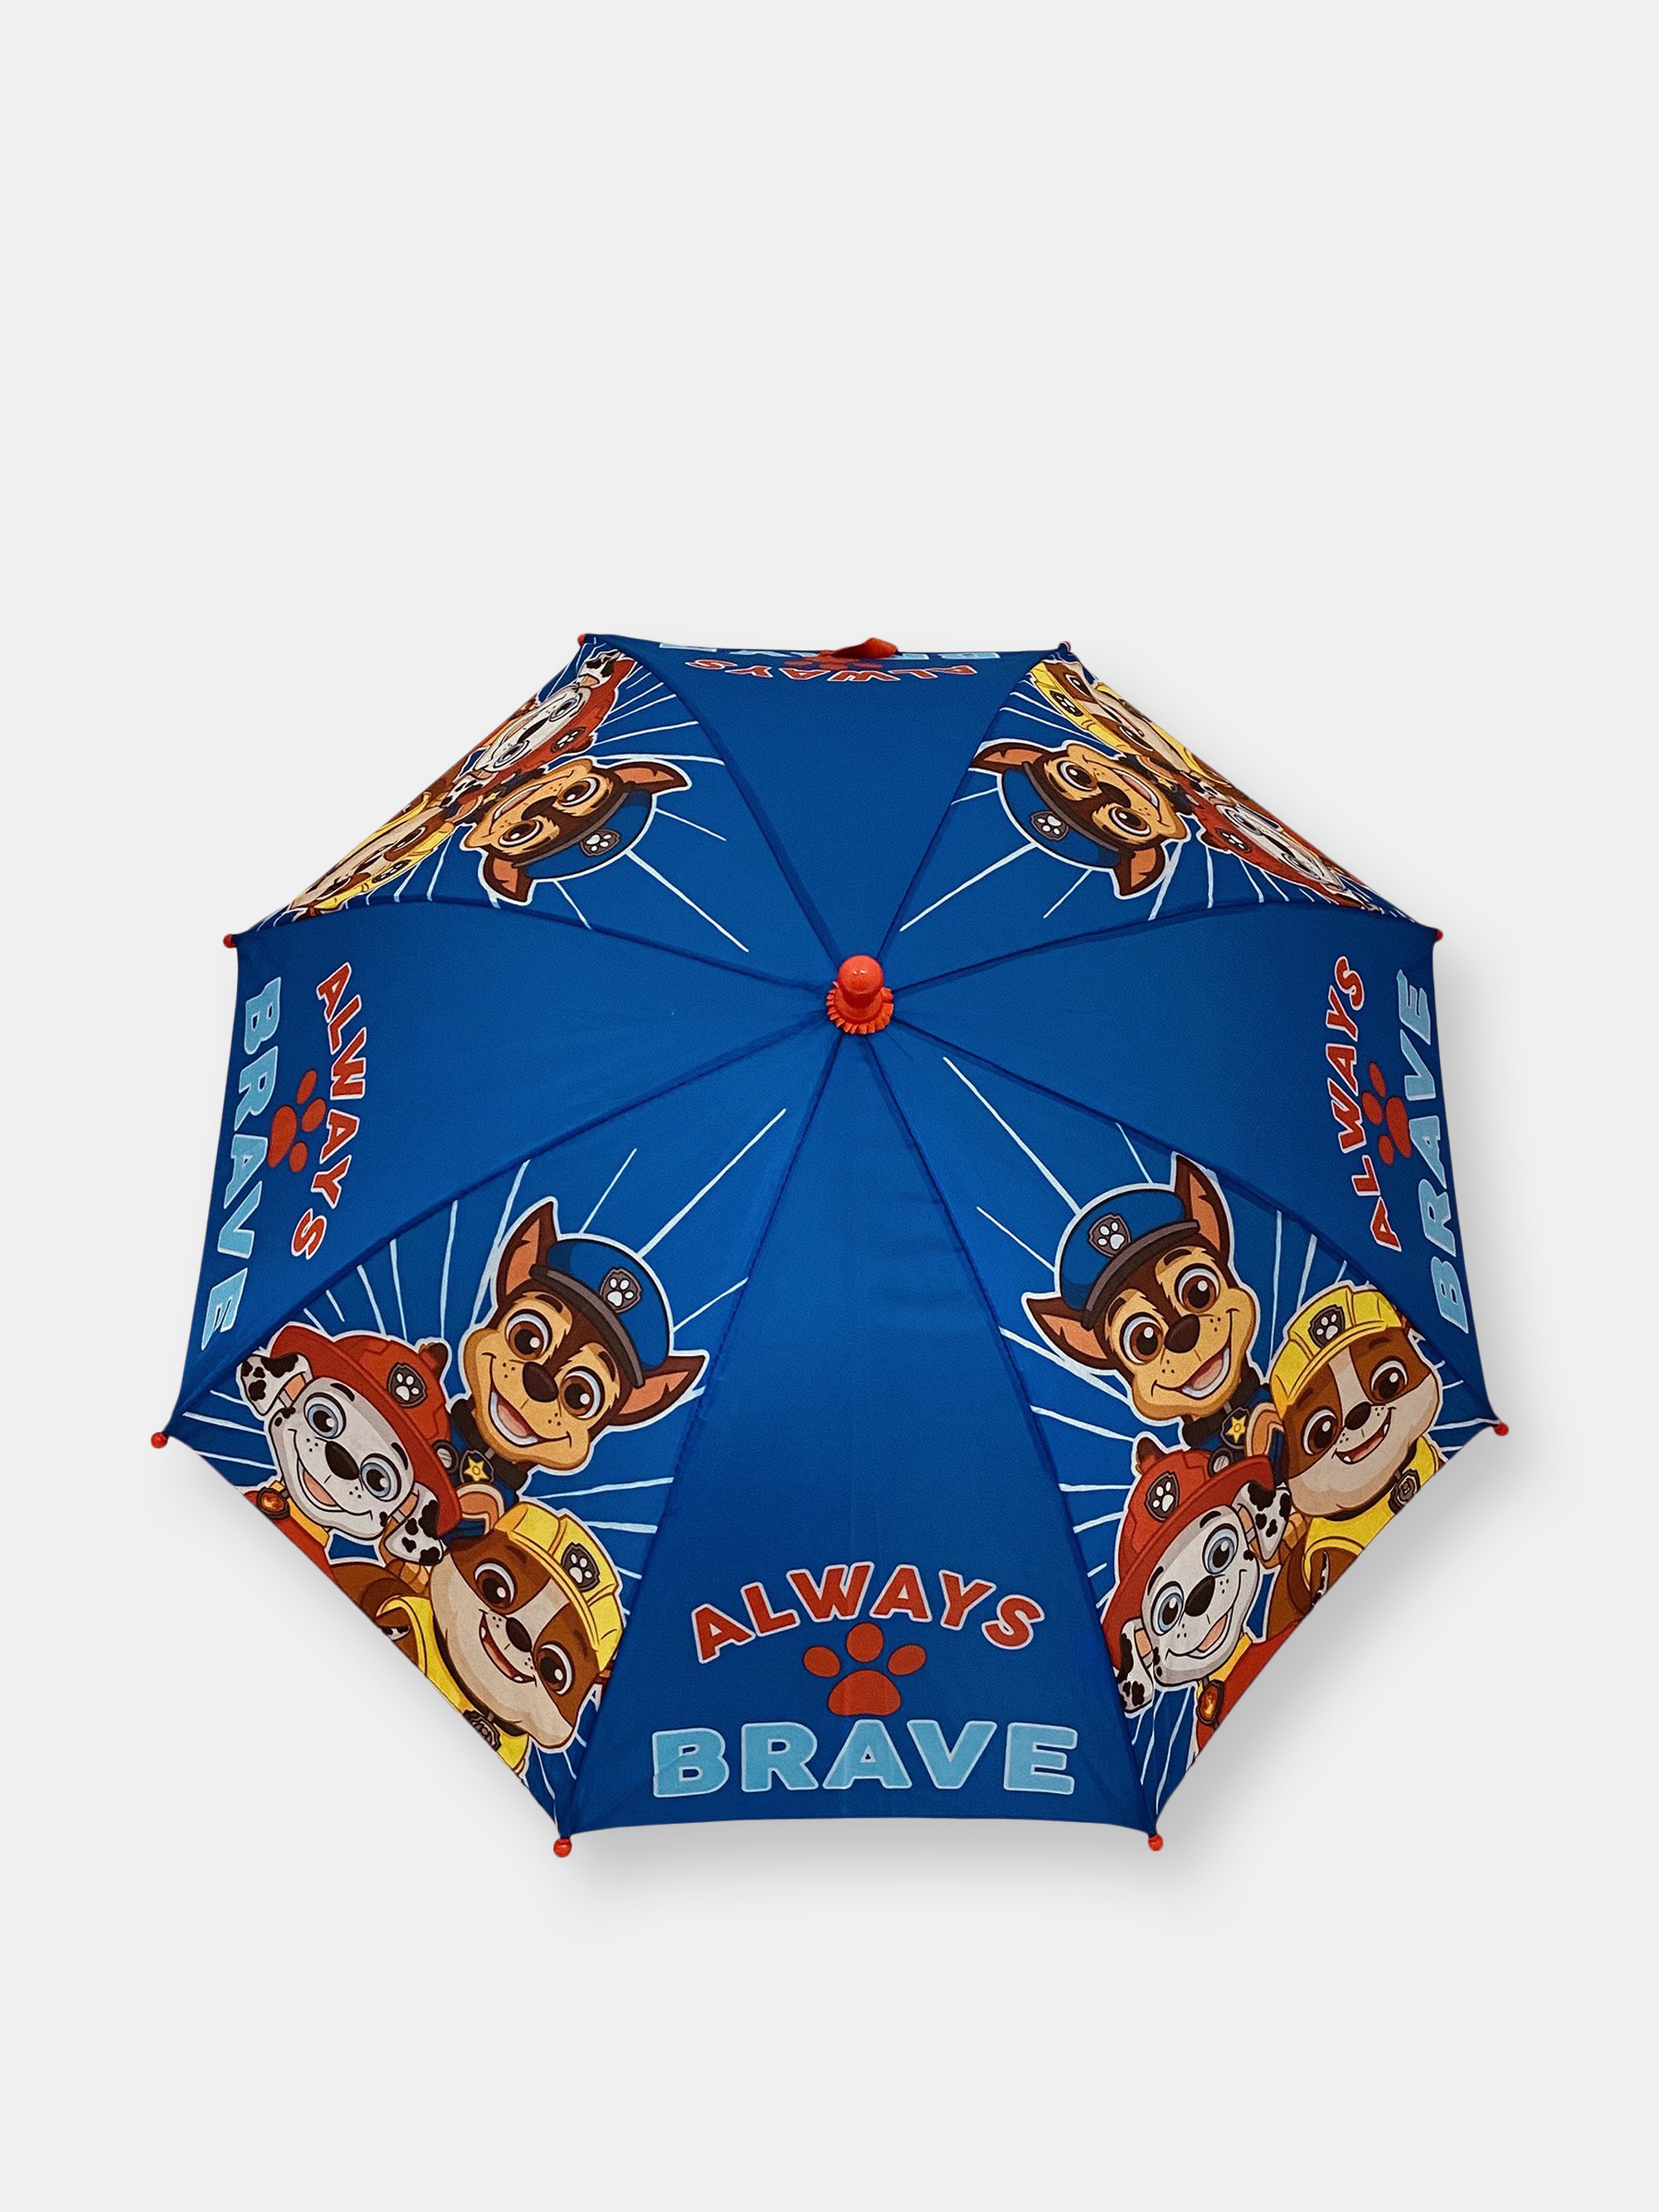 Abg Accessories Paw Patrol Kids Umbrella In Blue